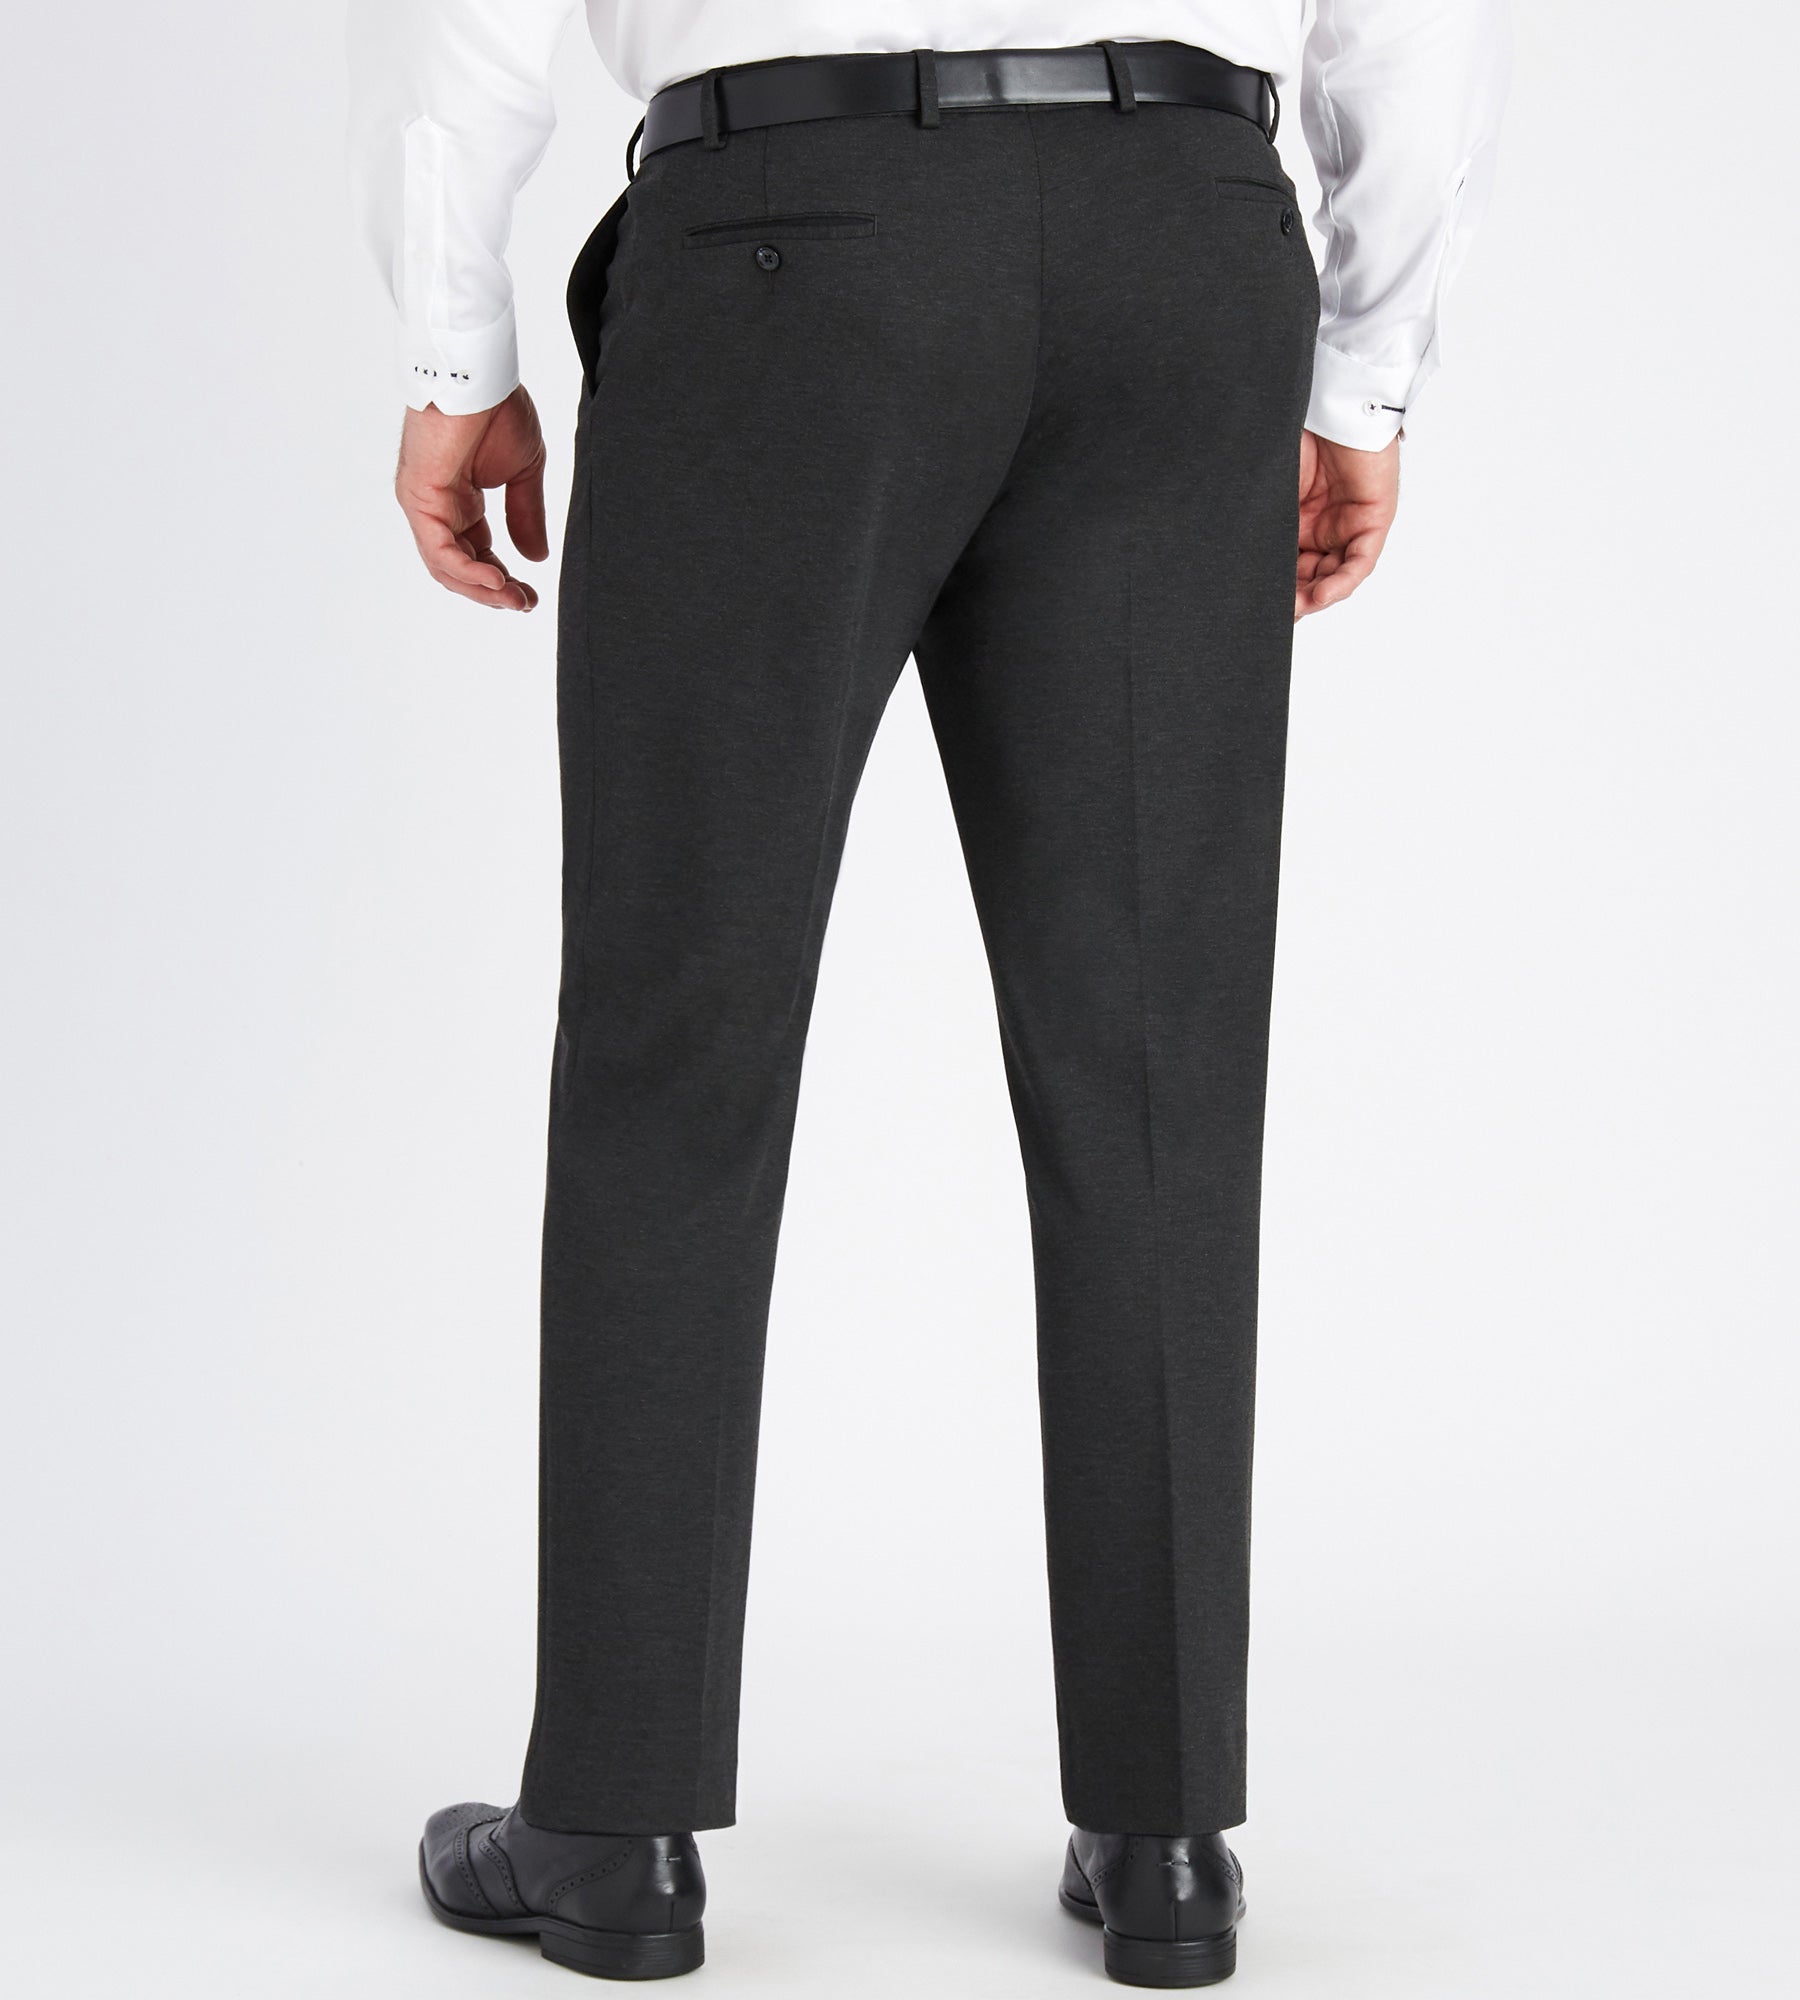 Express Extra Slim Wrinkle-Resistant Stretch Dress Pants 38 x 34